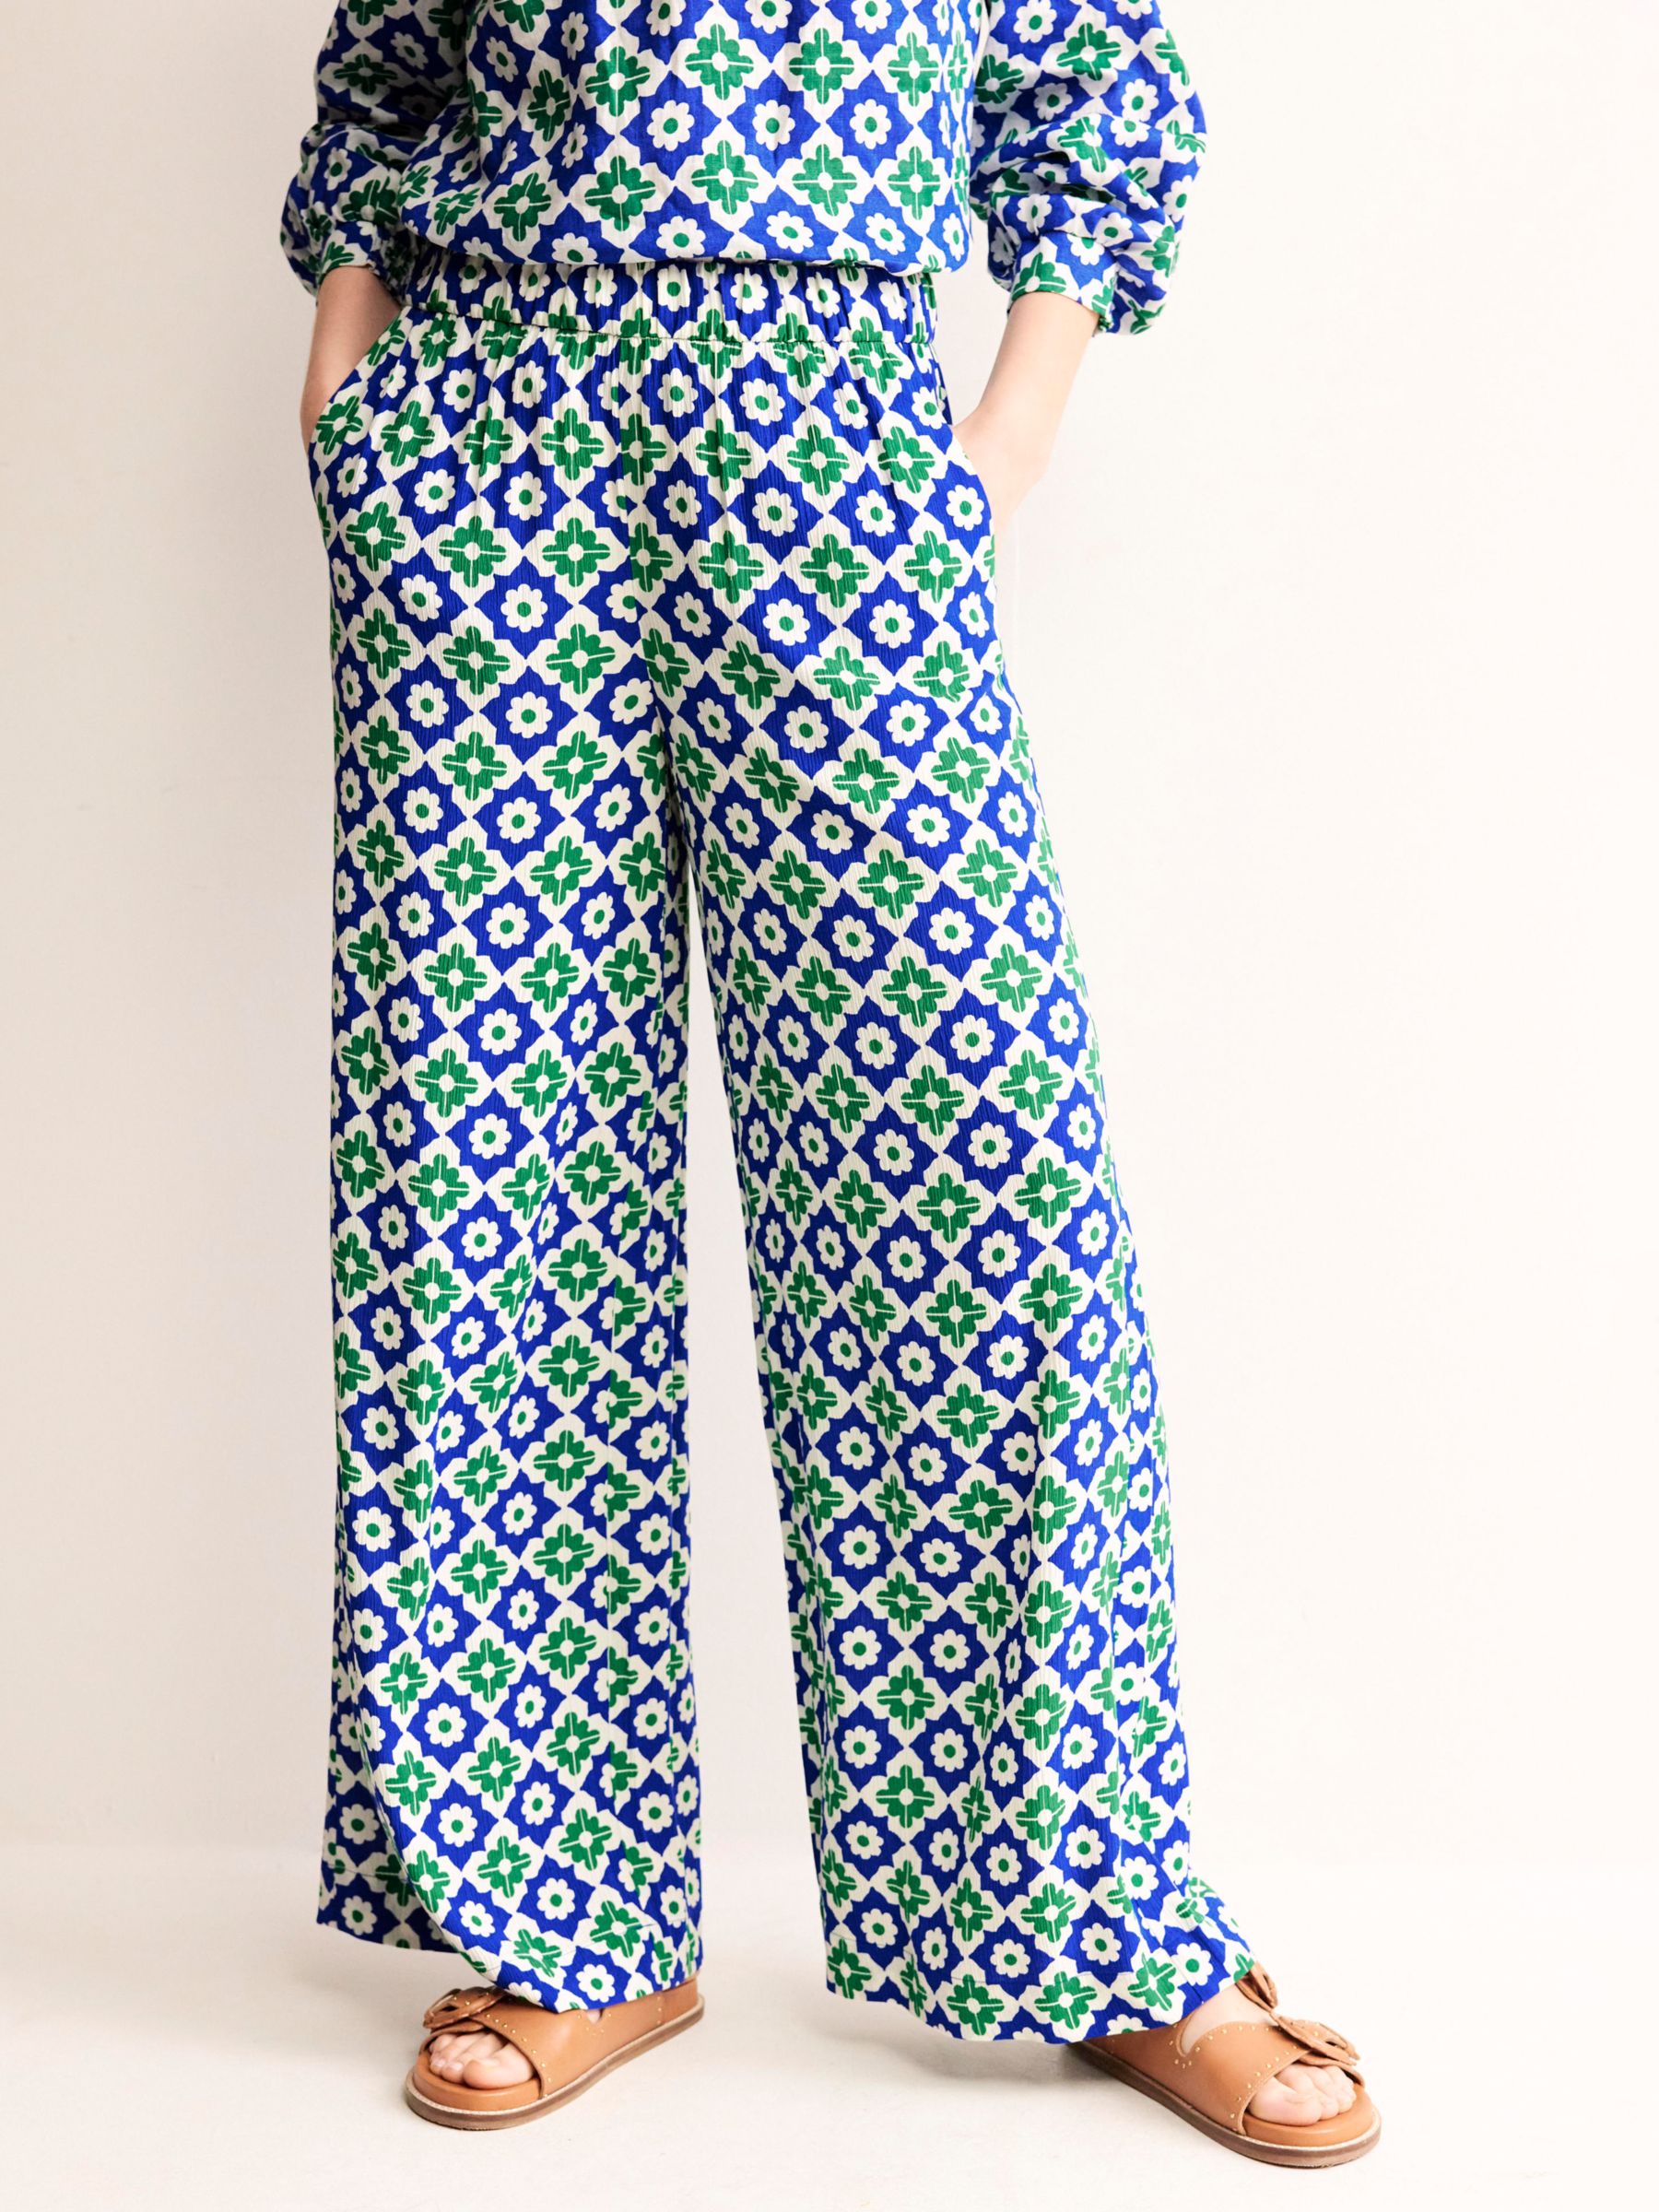 Boden Geometric Print Crinkle Wide Leg Trousers, Green/Multi, 10